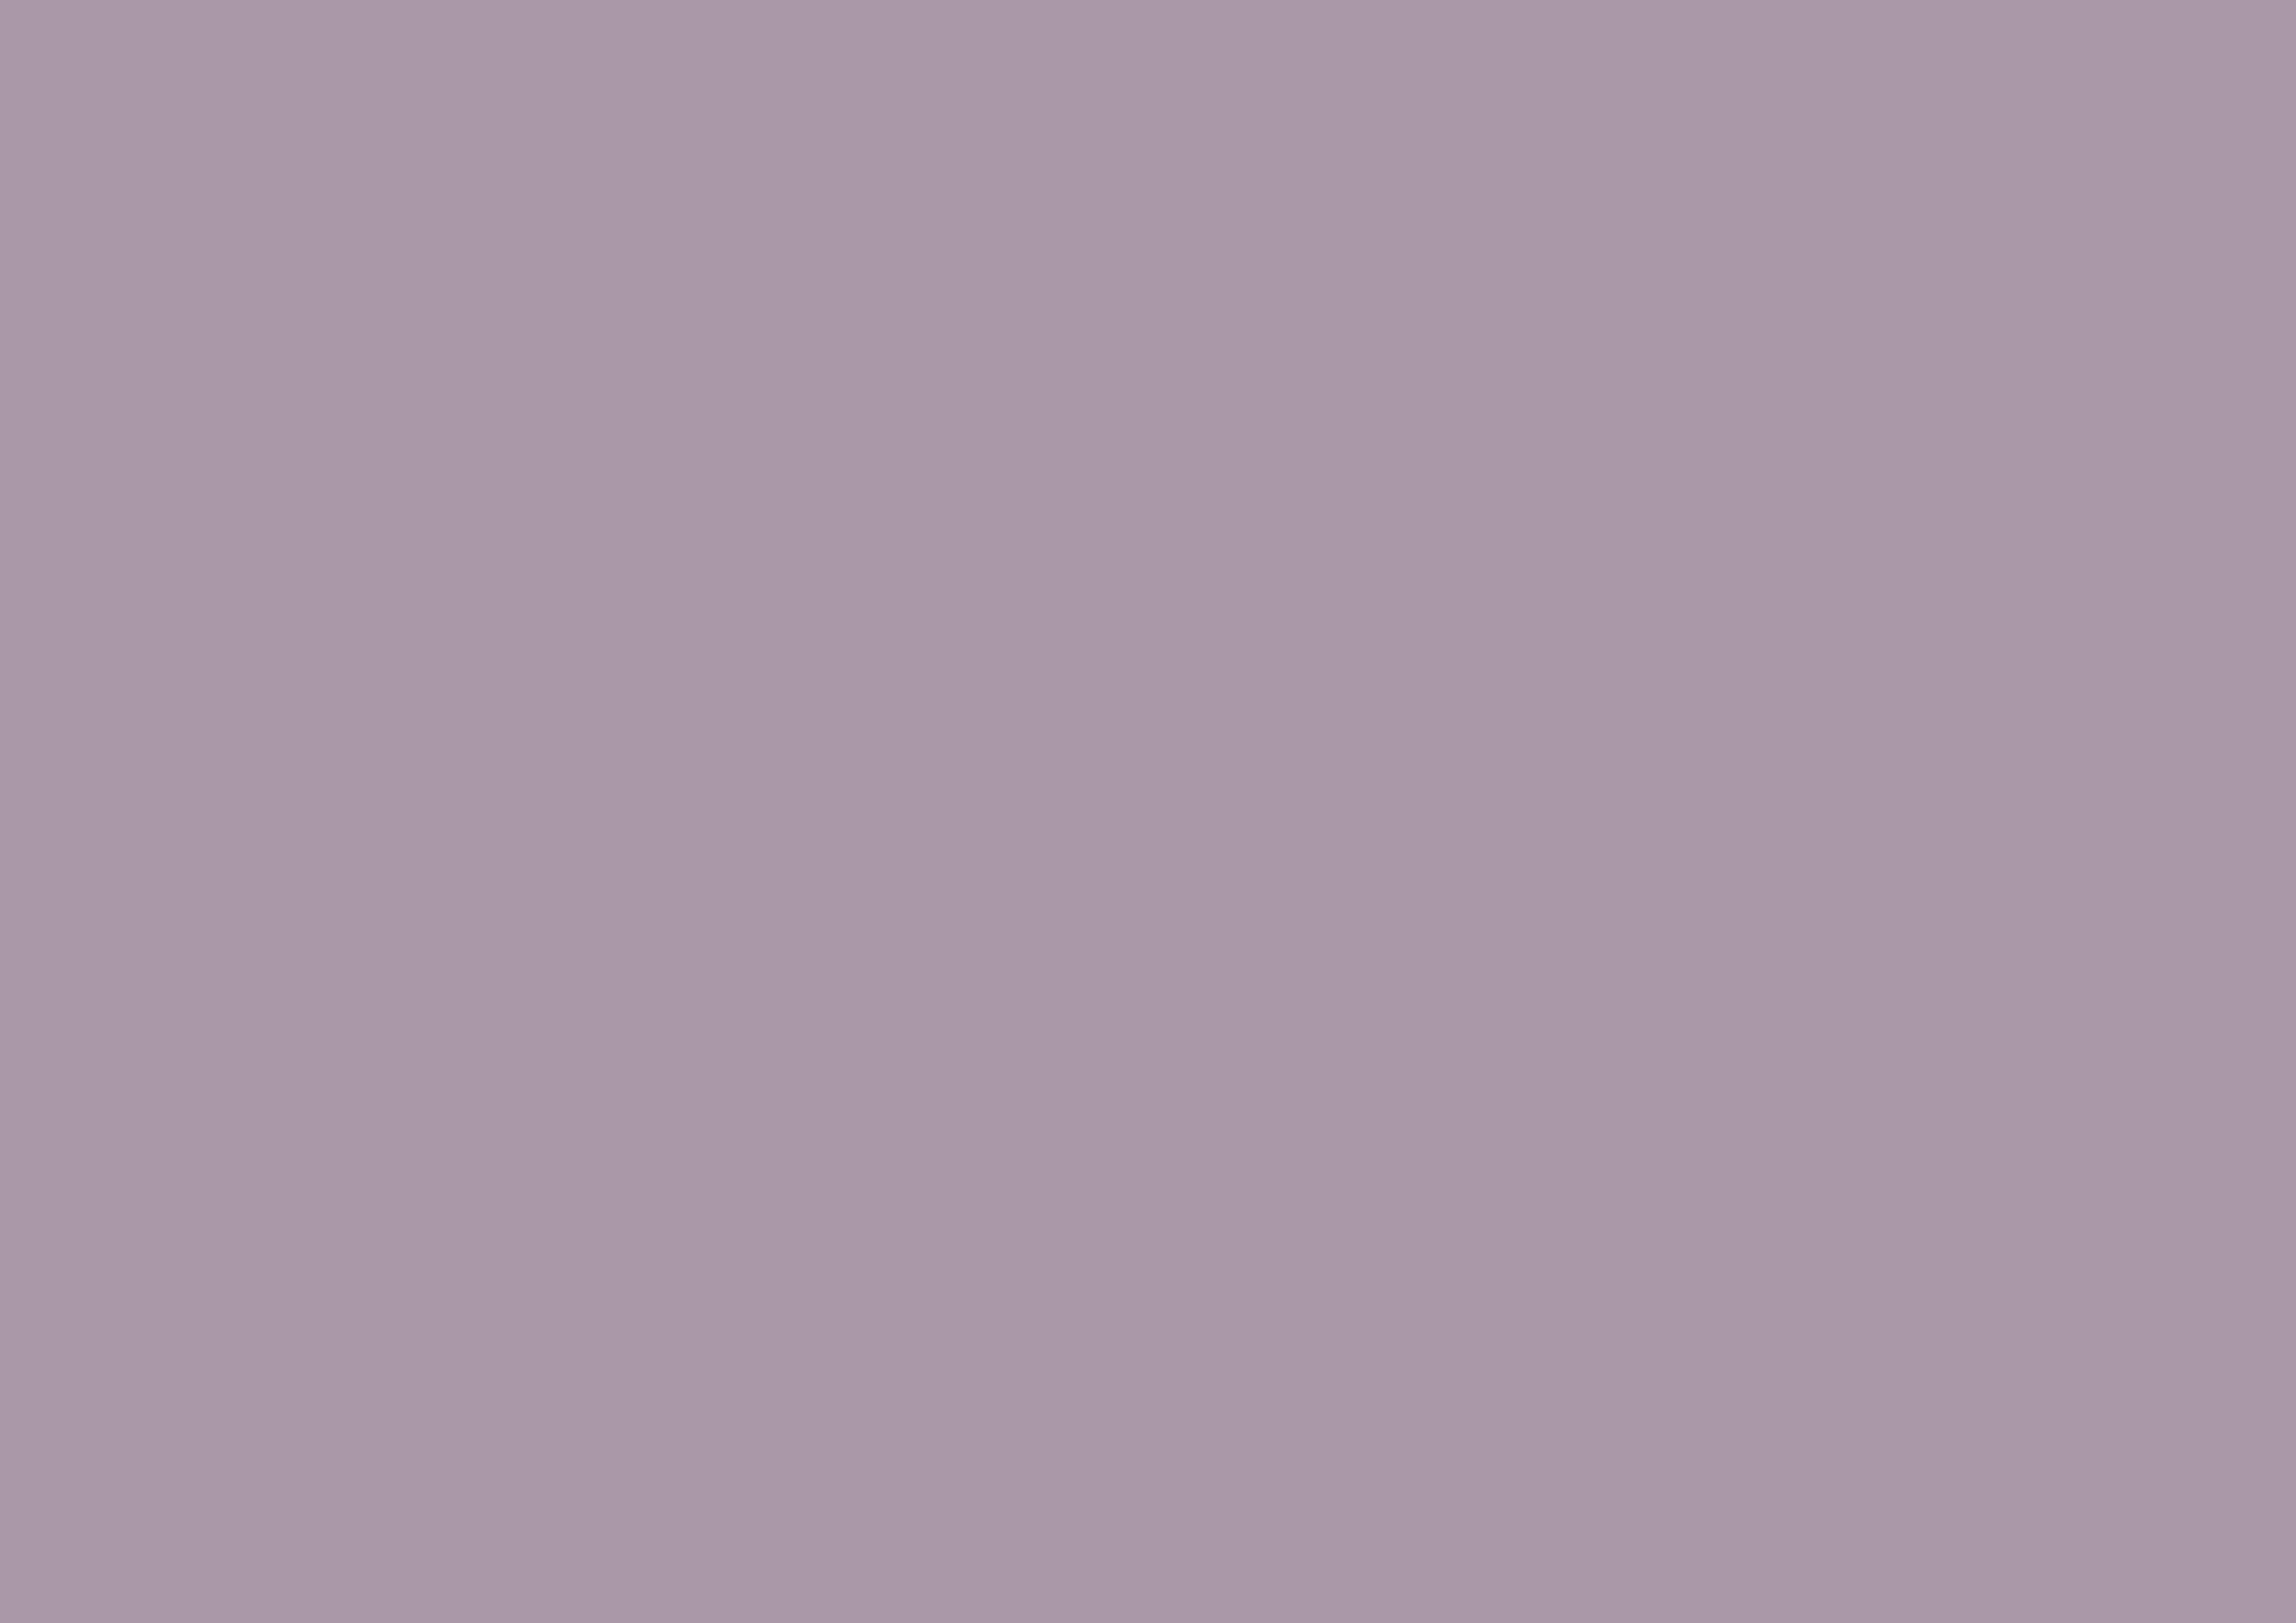 3508x2480 Rose Quartz Solid Color Background